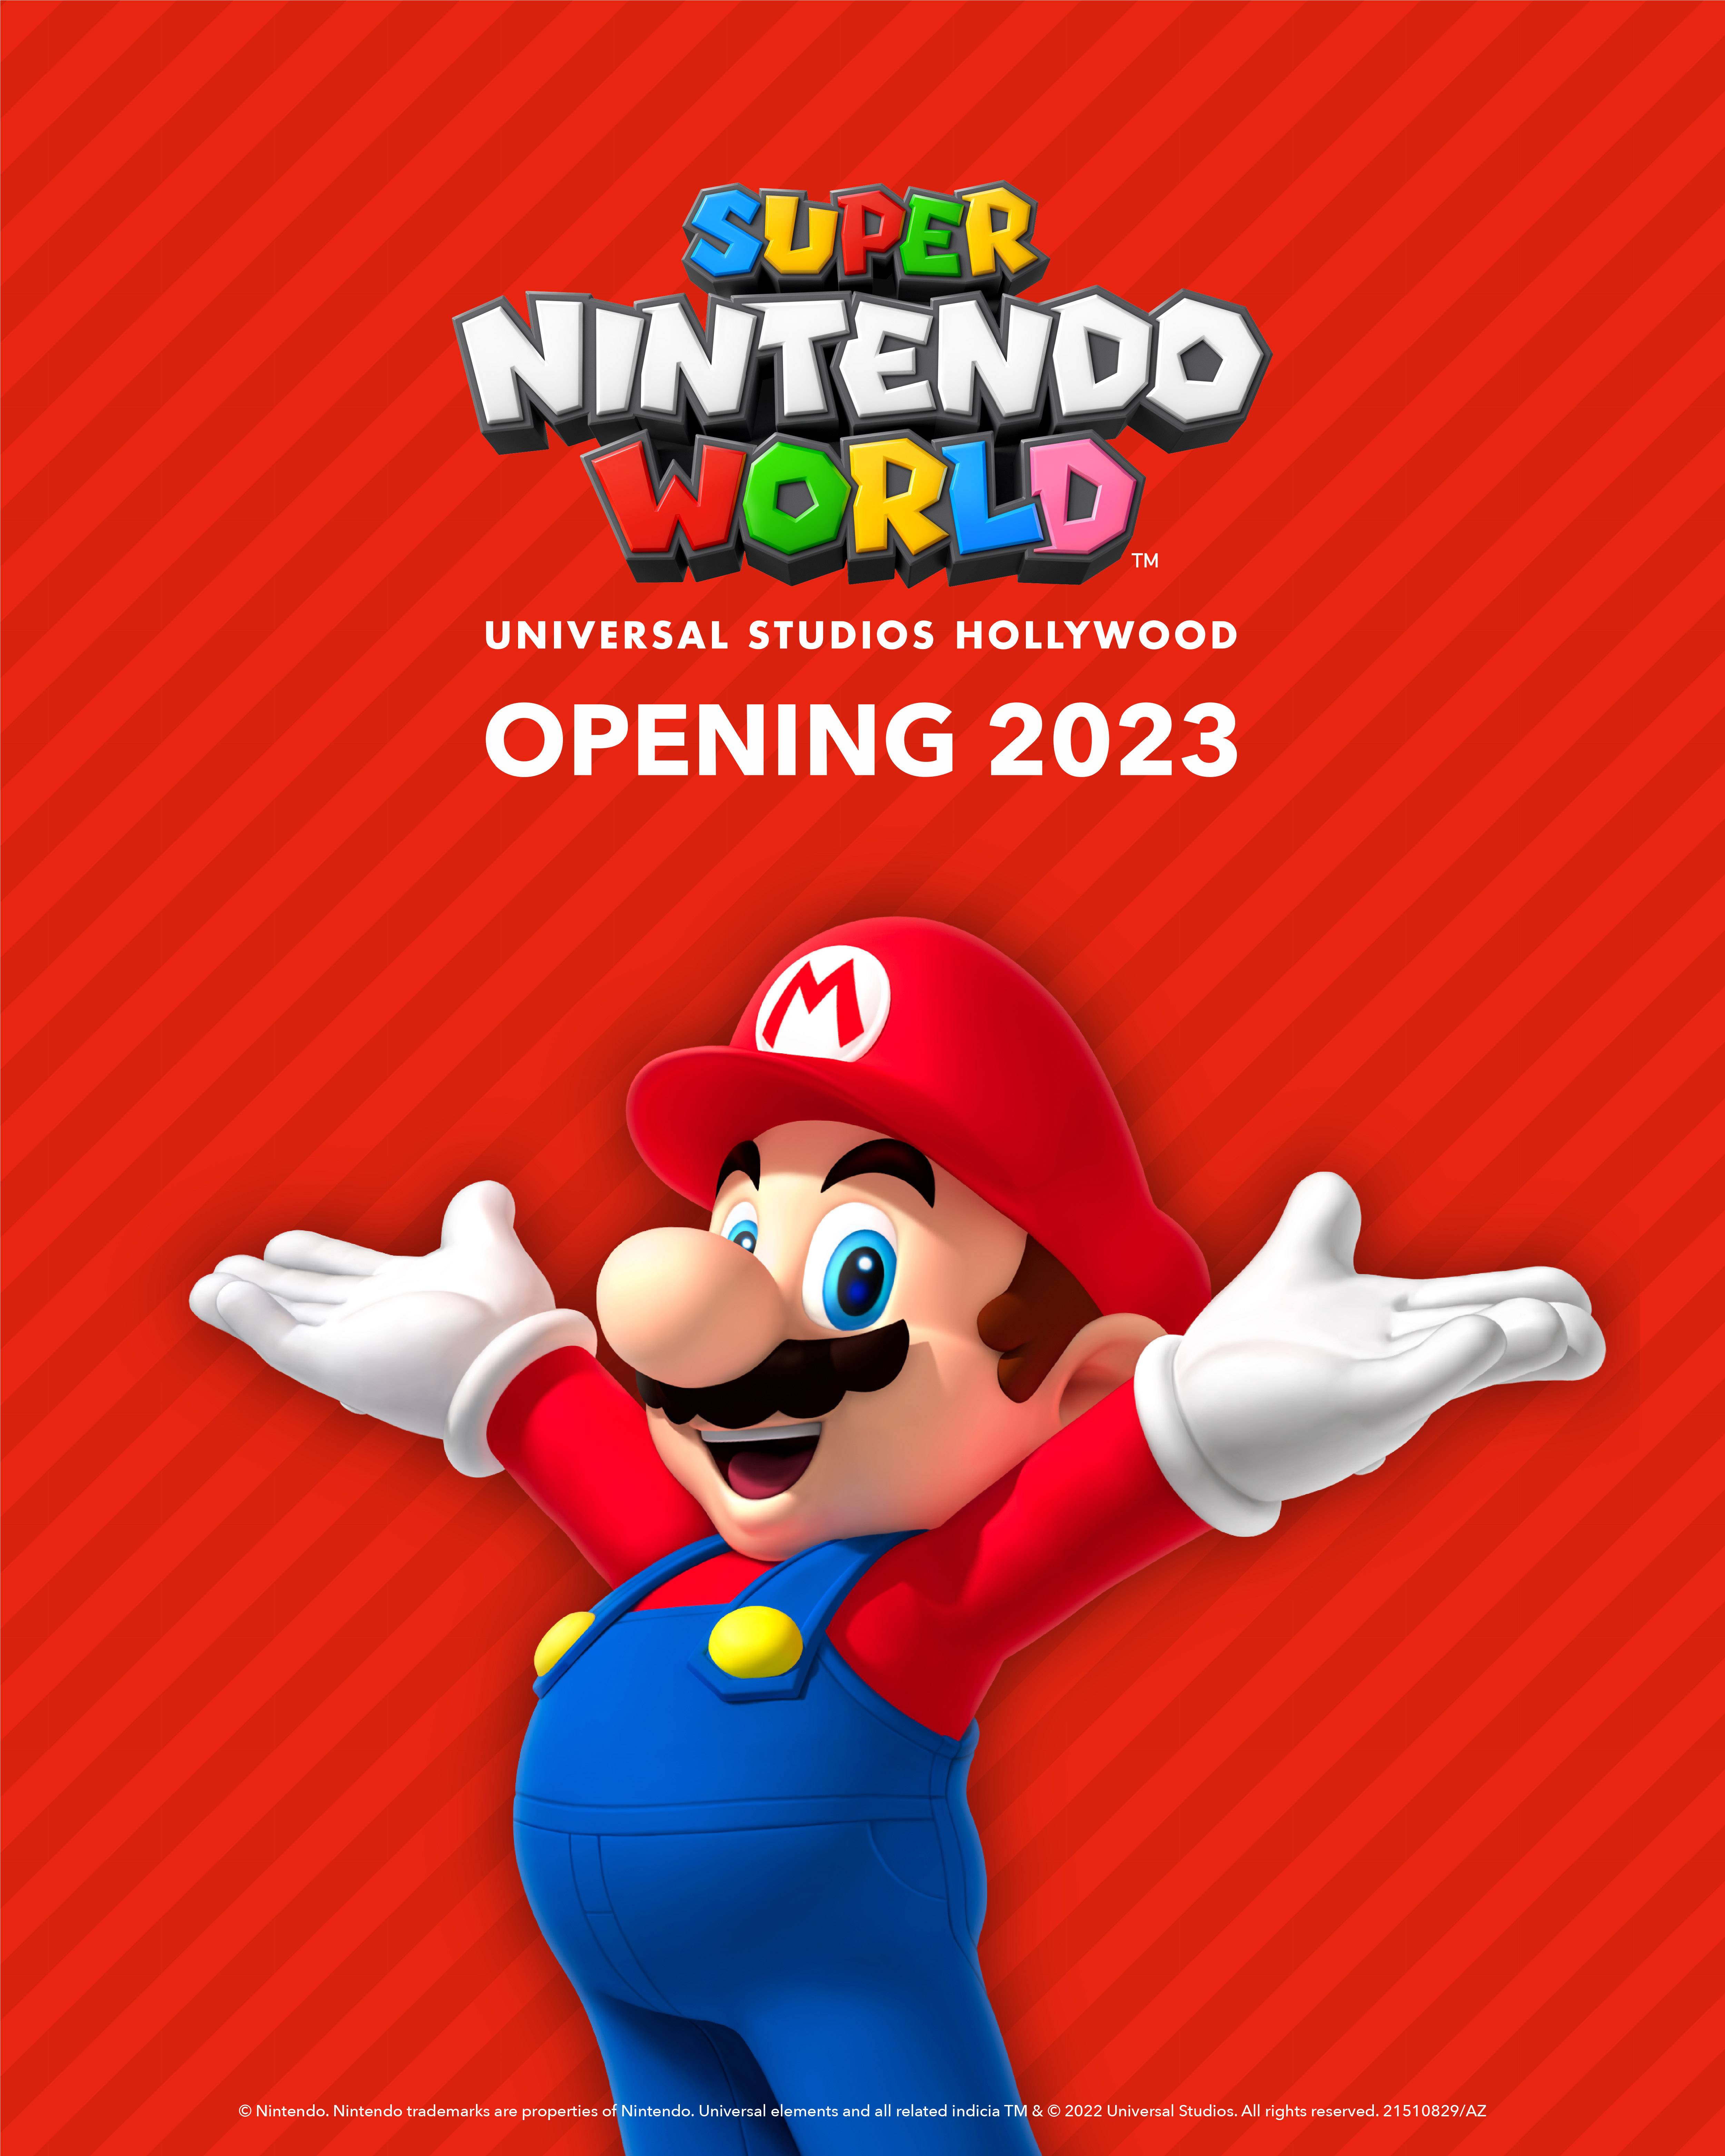 Super Nintendo World opening February 17 2023